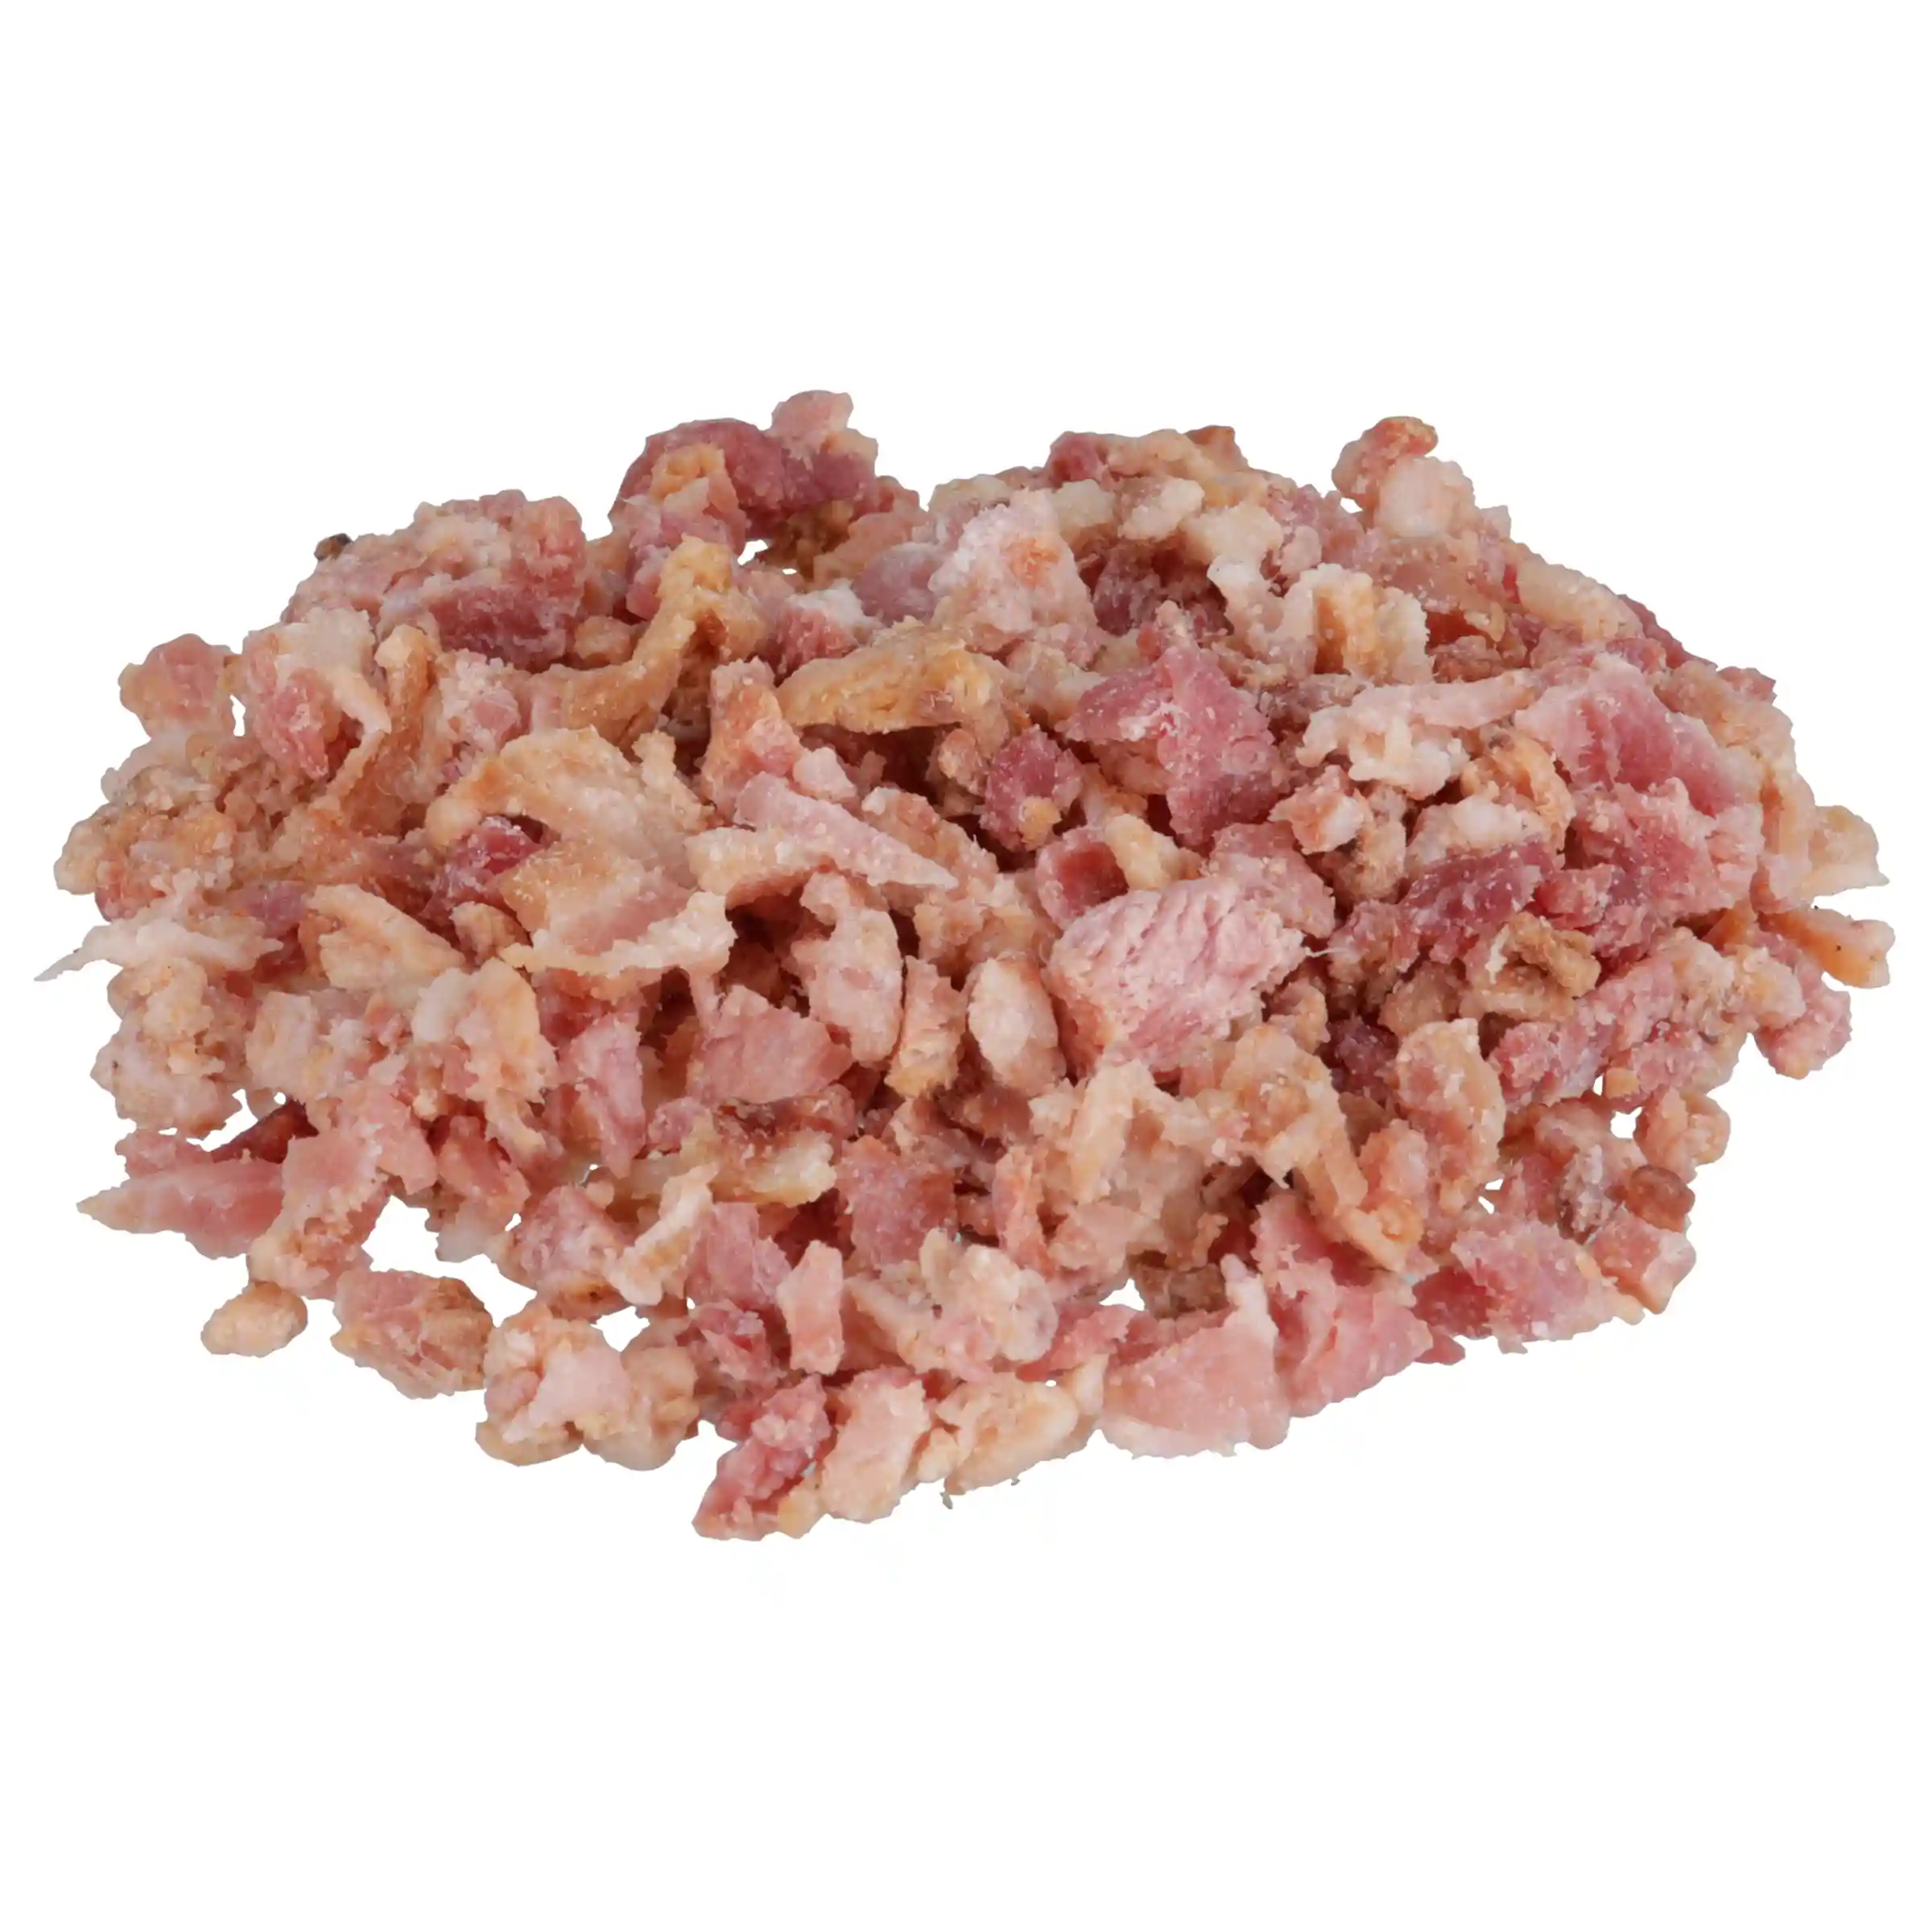 Jimmy Dean® Fully Cooked Hardwood Smoked Regular Cooked Bacon Pieceshttps://images.salsify.com/image/upload/s--1XwnZGsQ--/q_25/tdz4dfosemzjufd8jhqe.webp